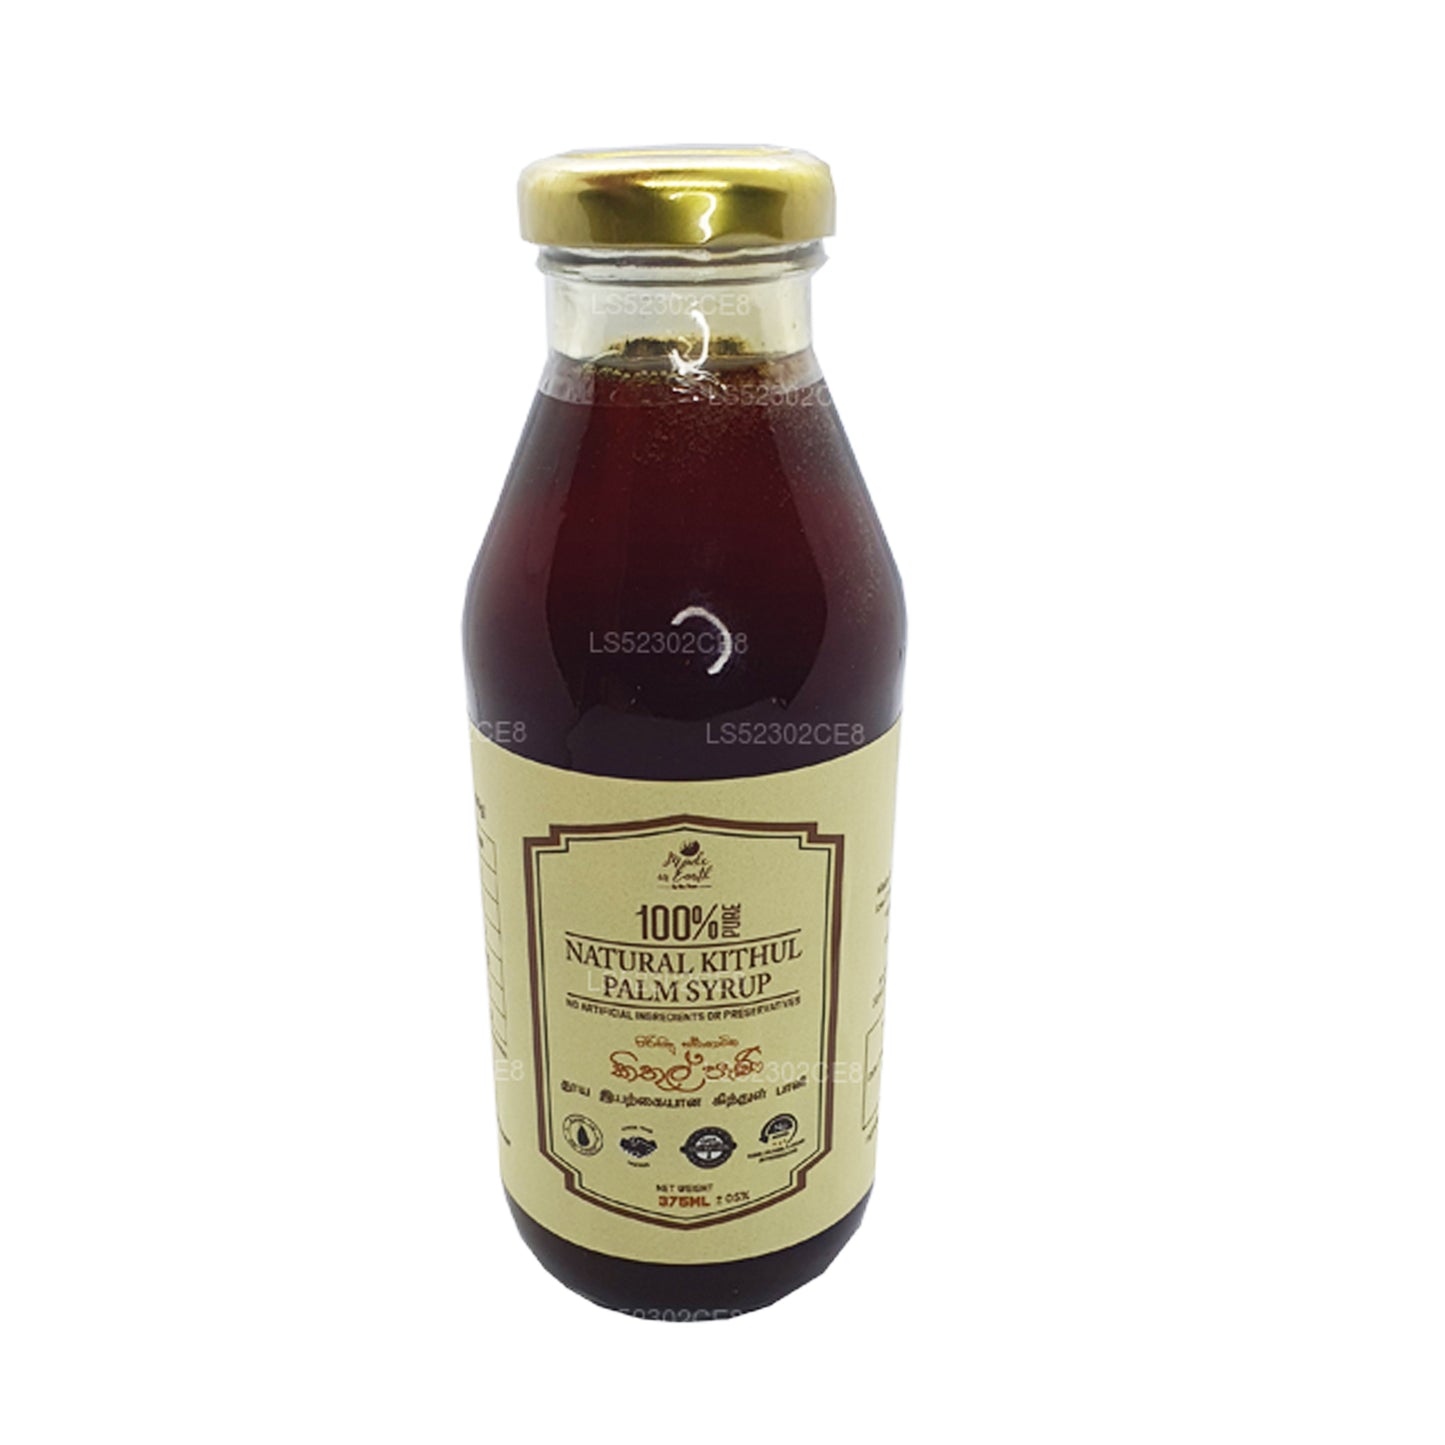 Melaza de kithul natural pura hecha en la tierra (375 ml)